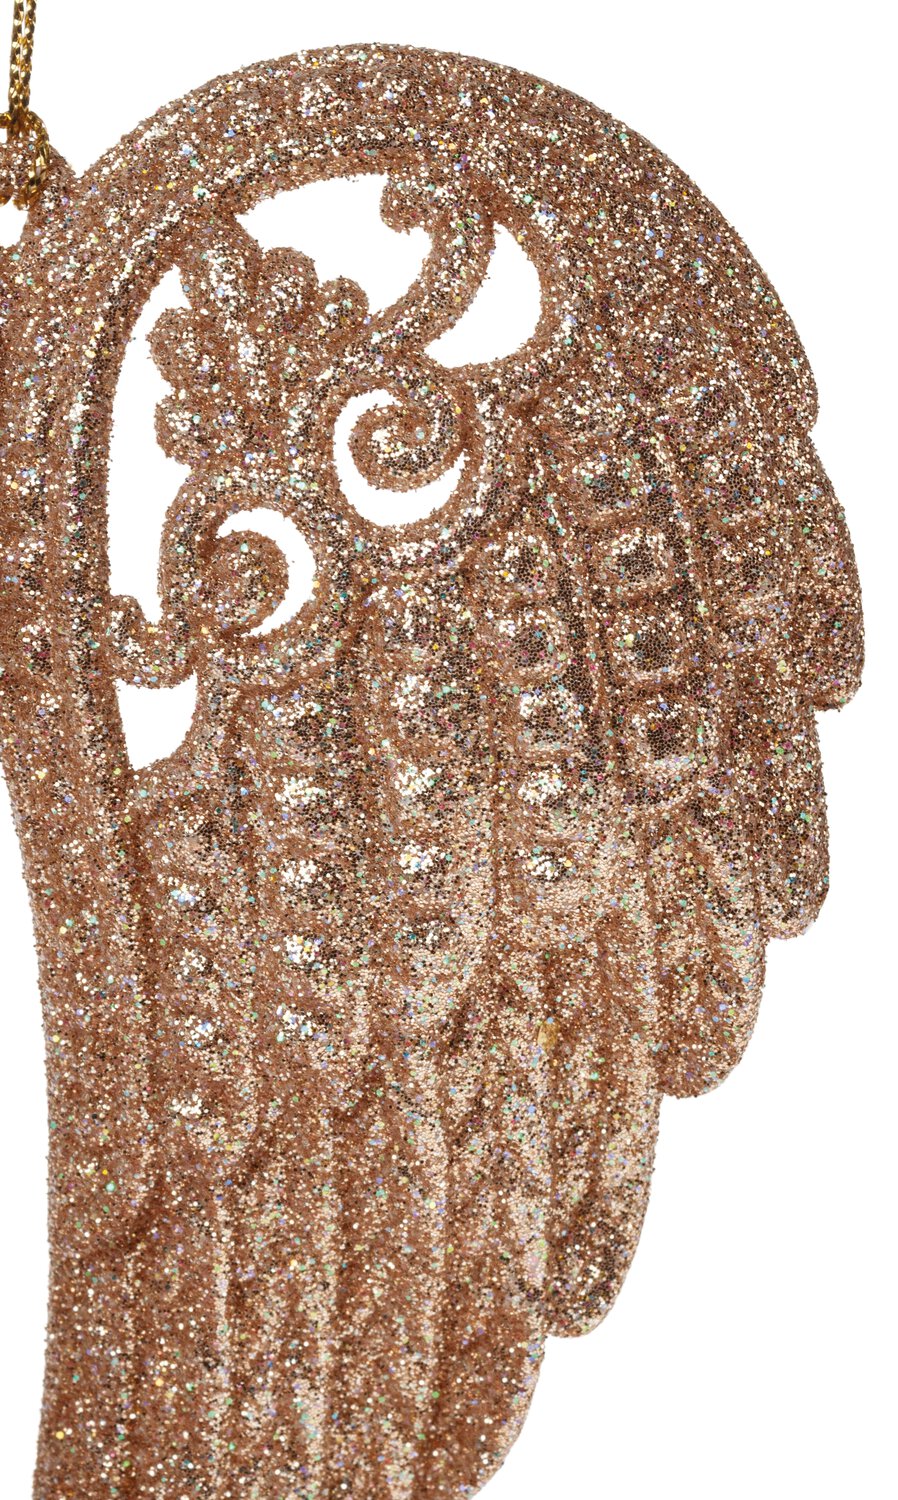 Deko Engelsflügel aus Acryl, 15 cm, thé-gold